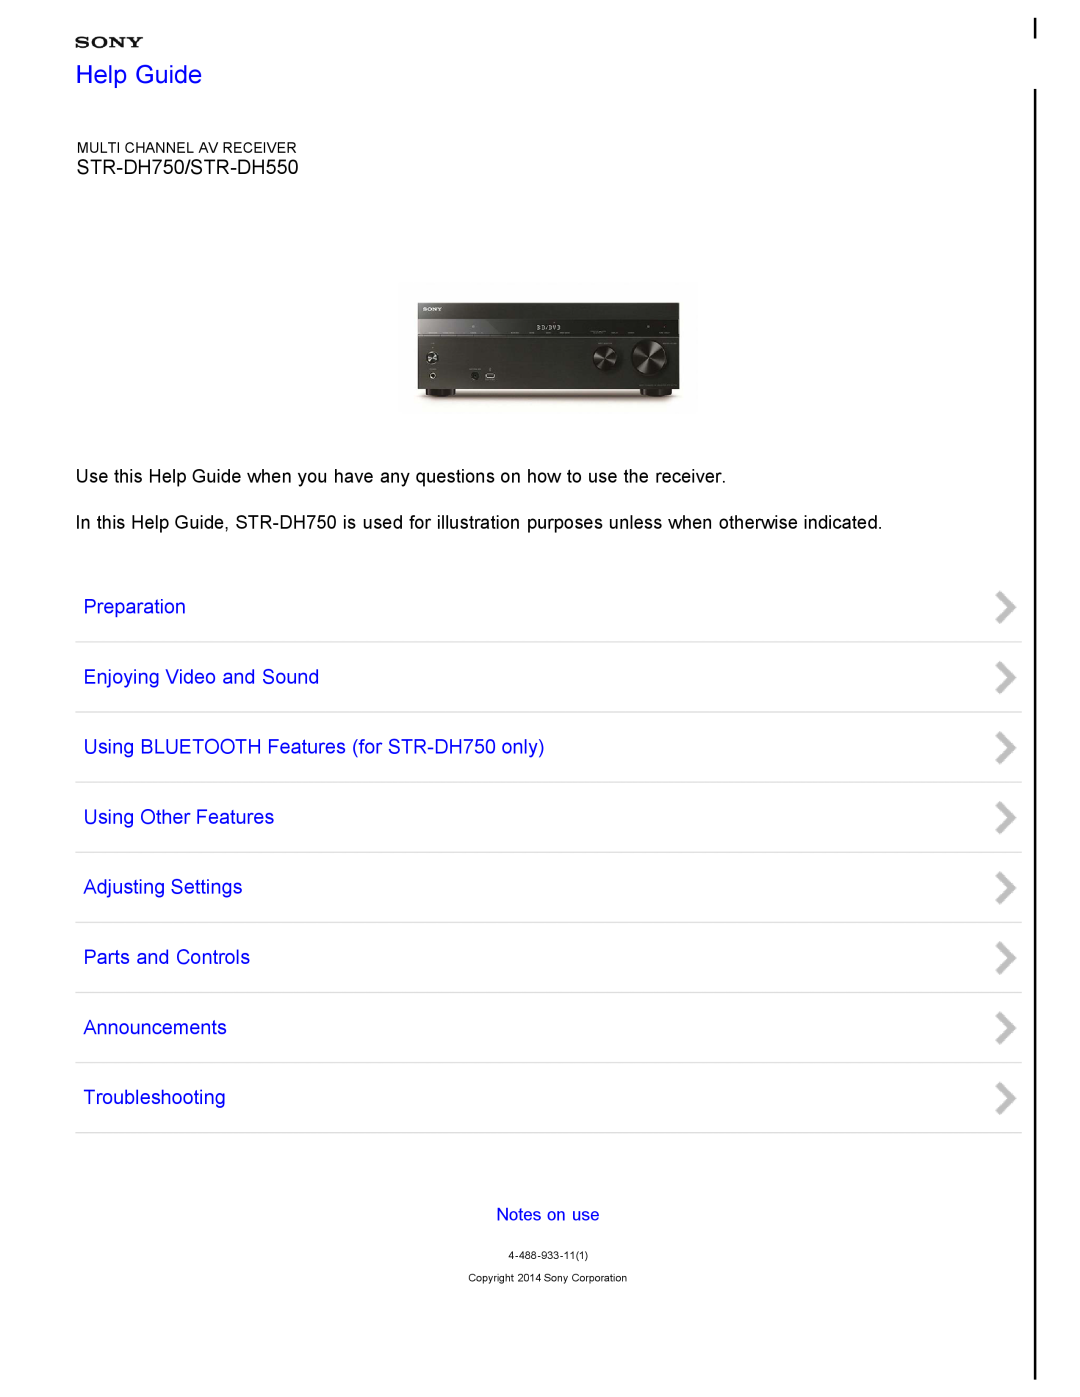 Sony STR-FH750 manual Help Guide, STR-DH750/STR-DH550, Preparation Enjoying Video and Sound 